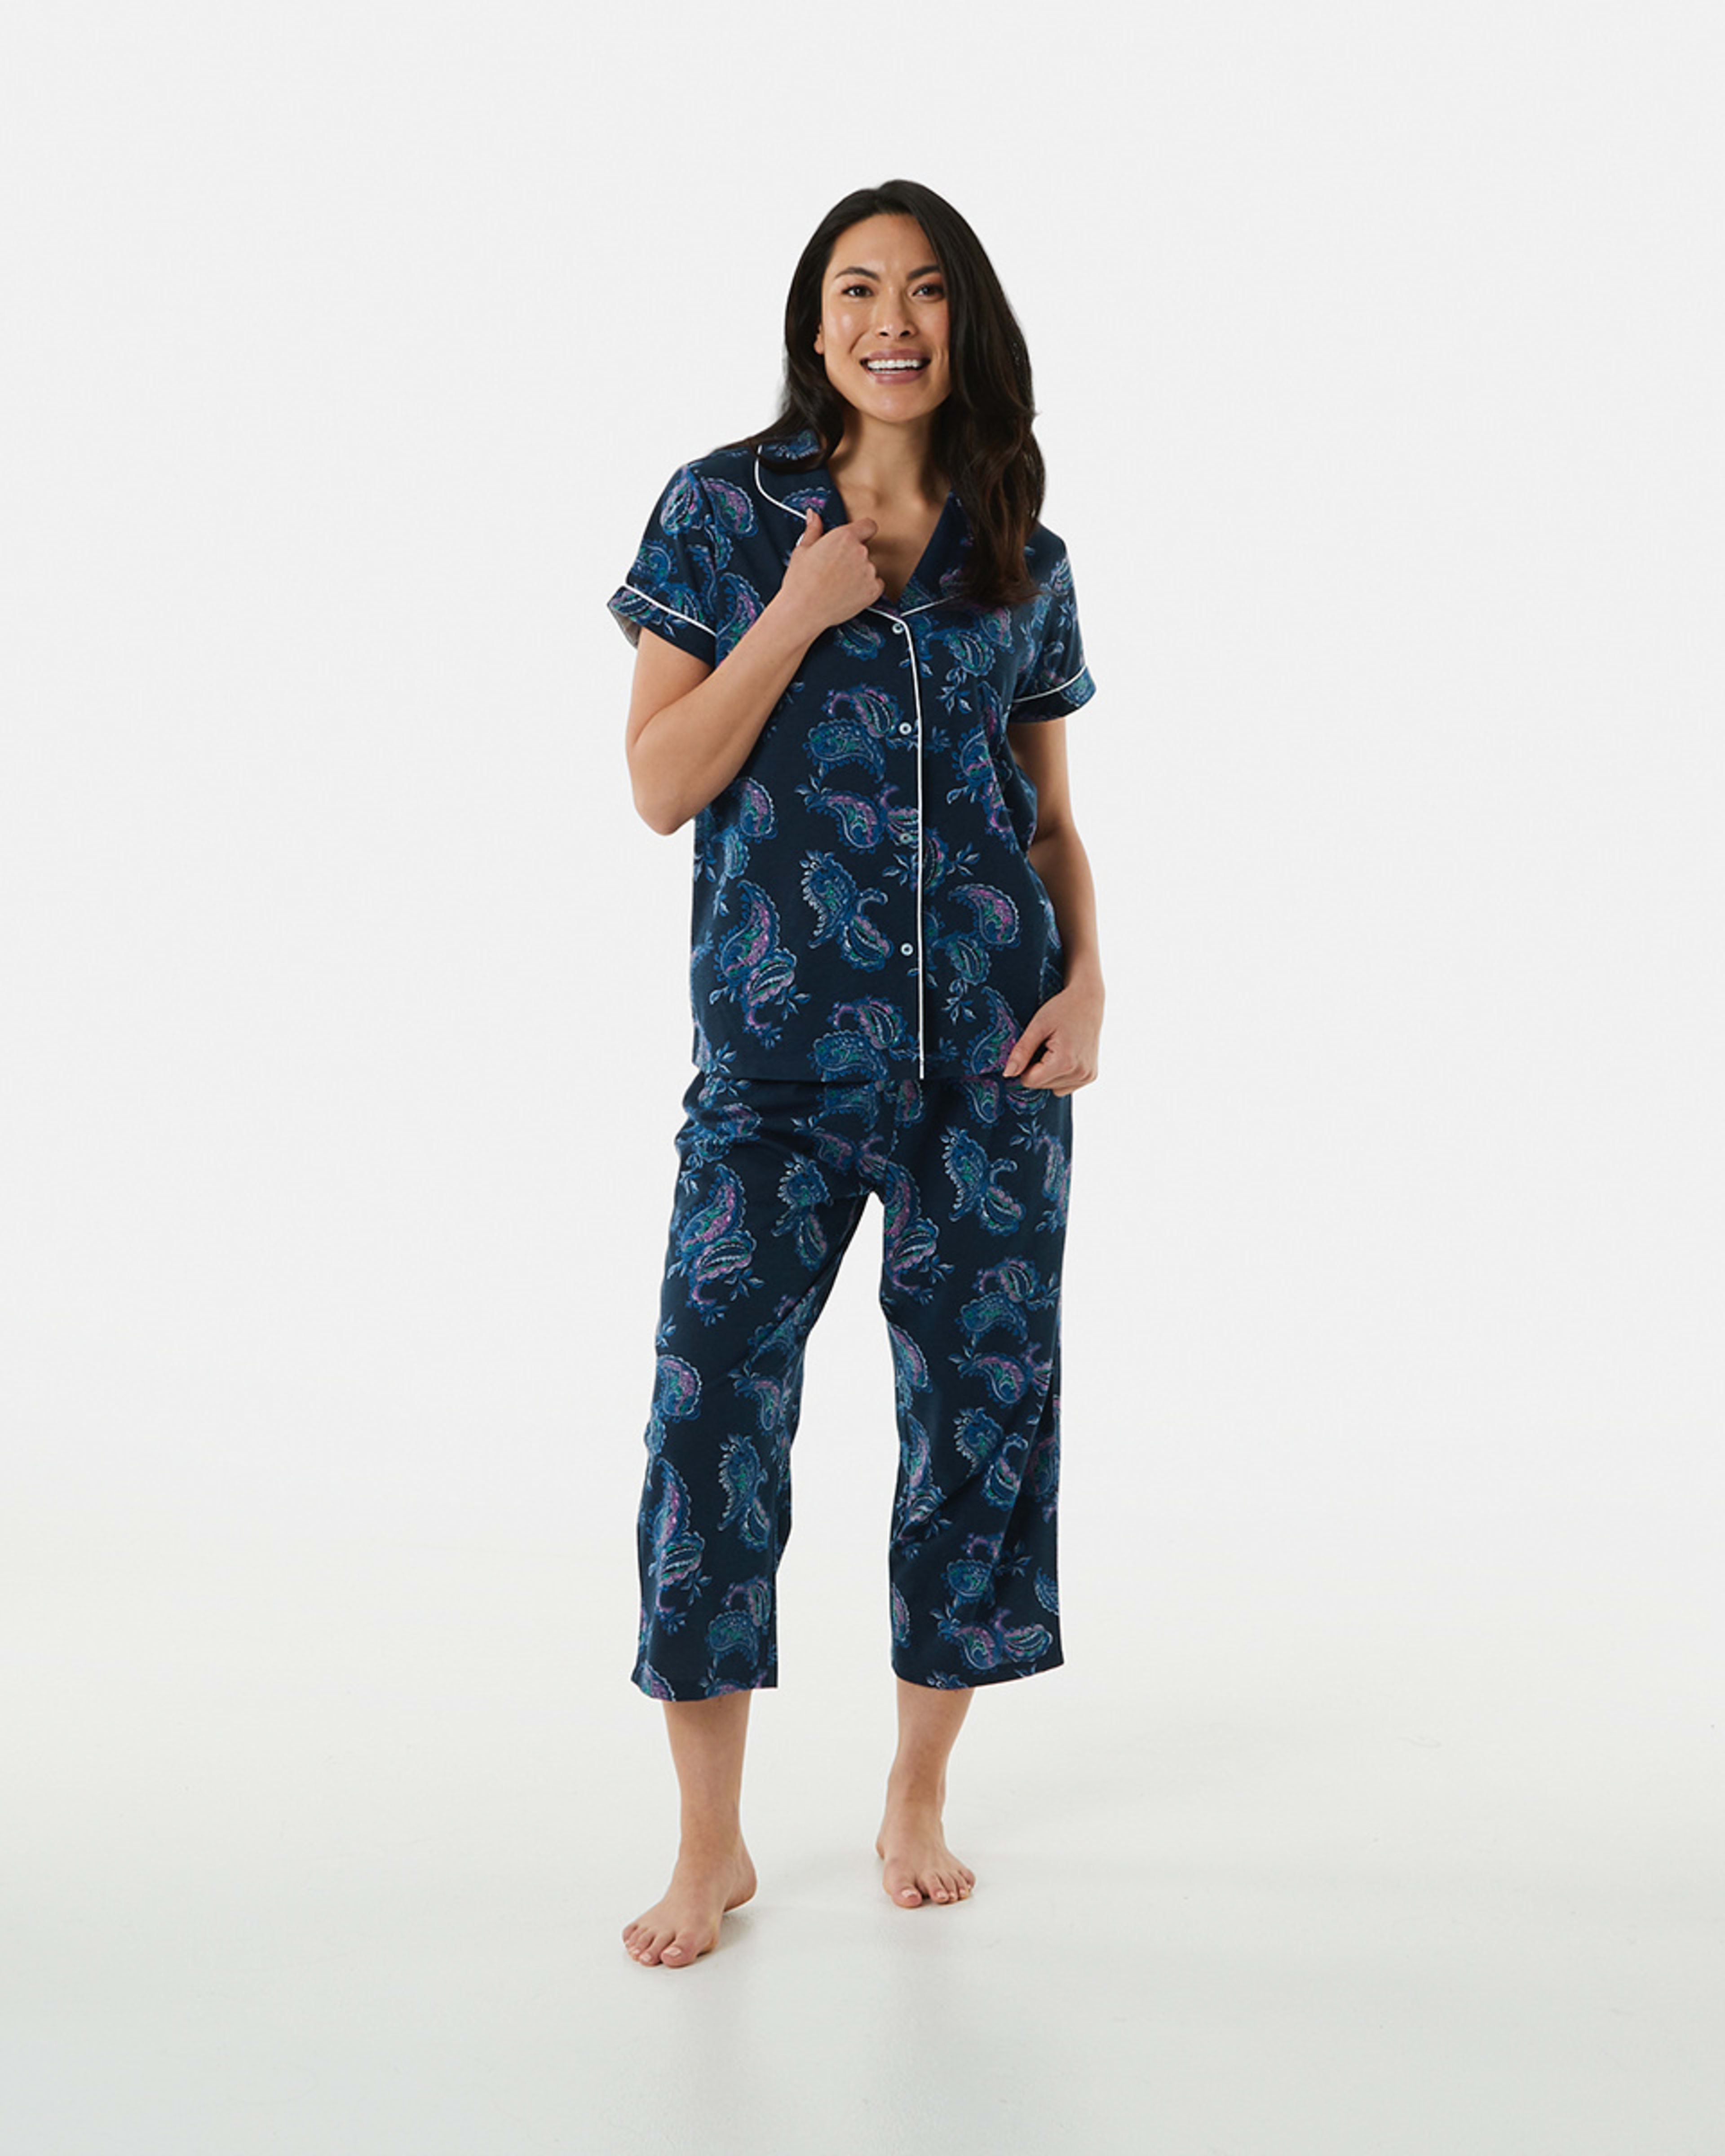 Short Sleeve Top and 3/4 Pants Pyjama Set - Kmart